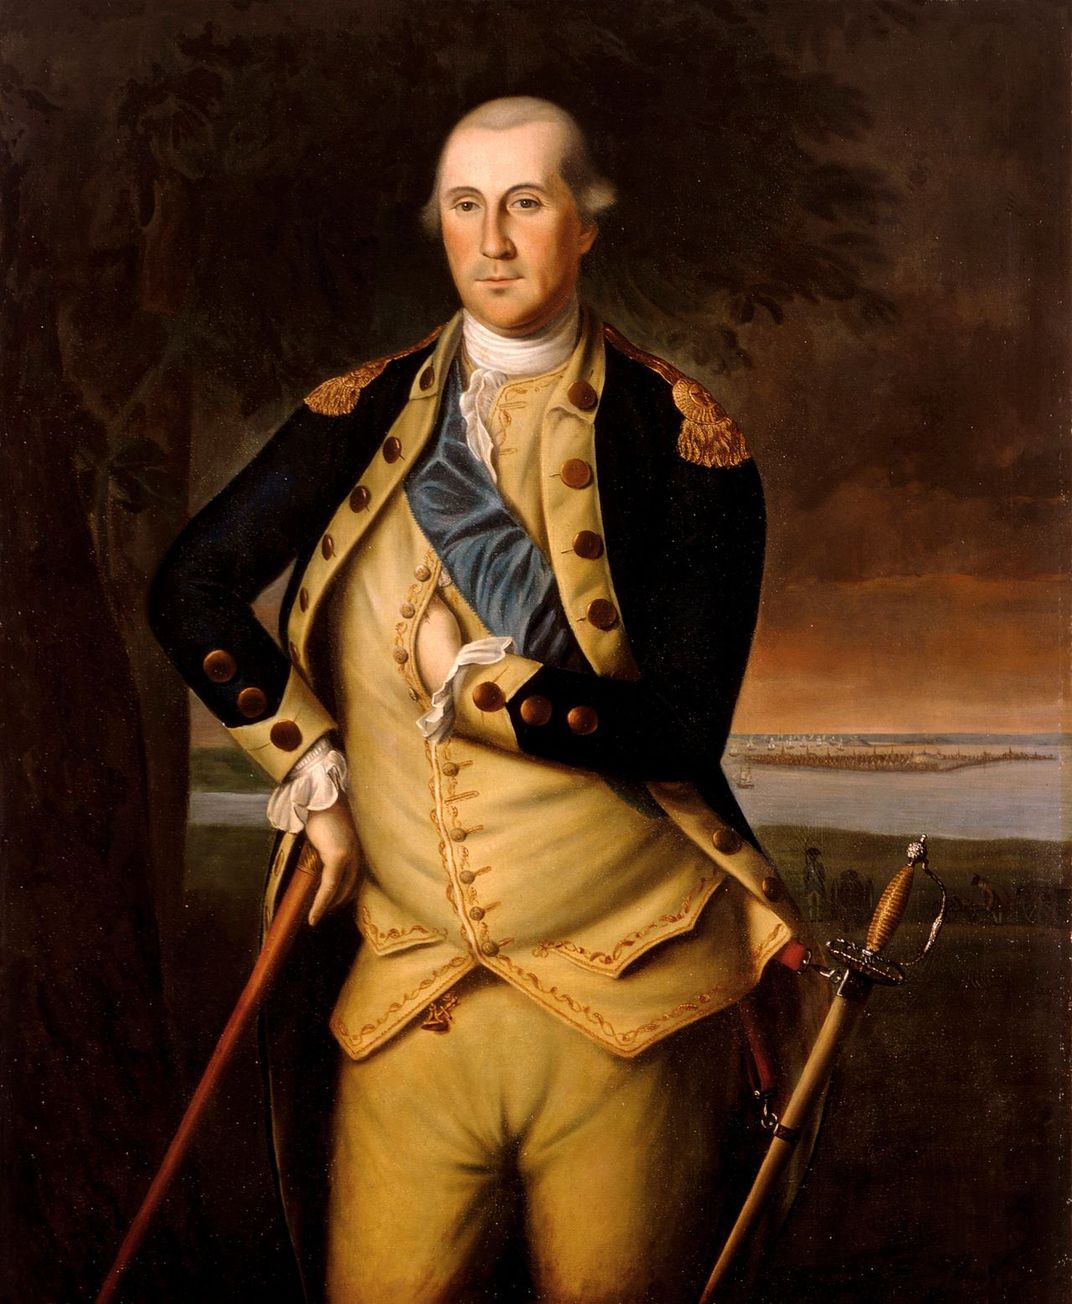 A circa 1776 portrait of Washington